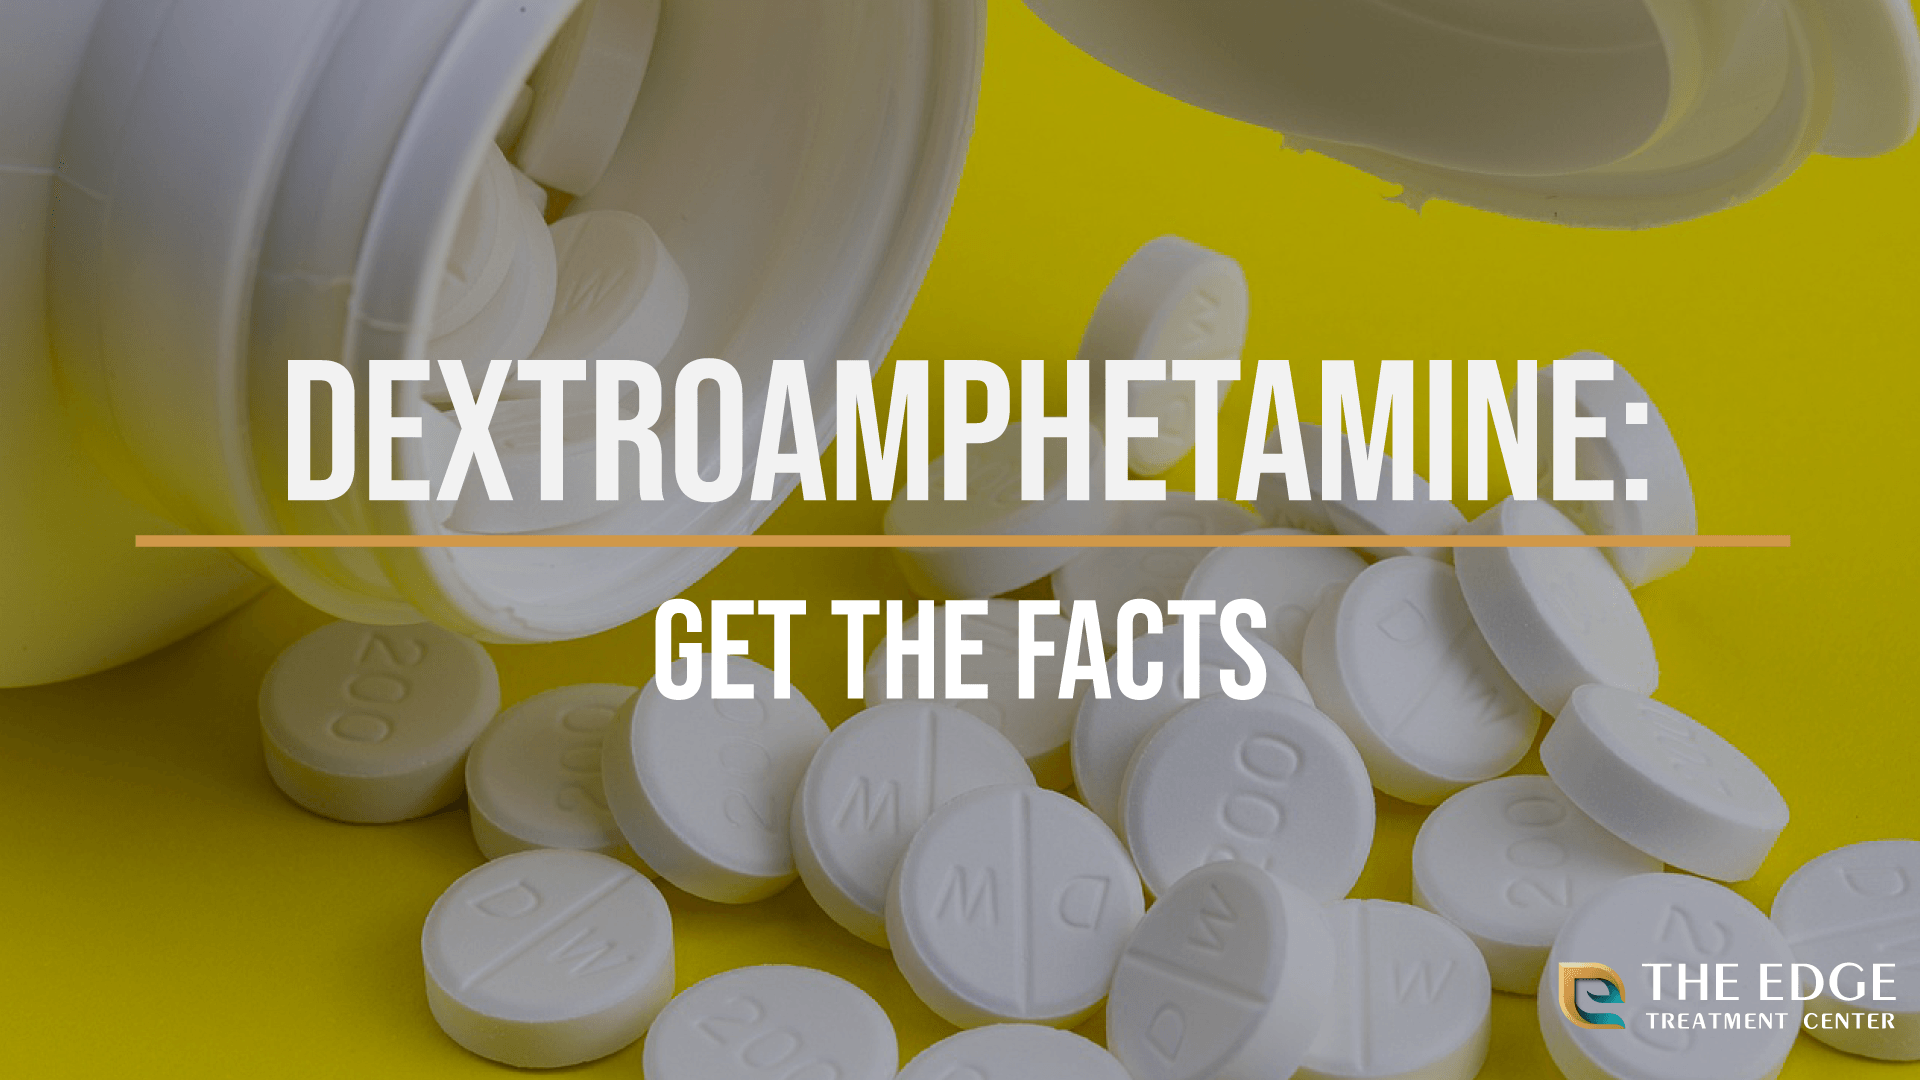 What is Dextroamphetamine?